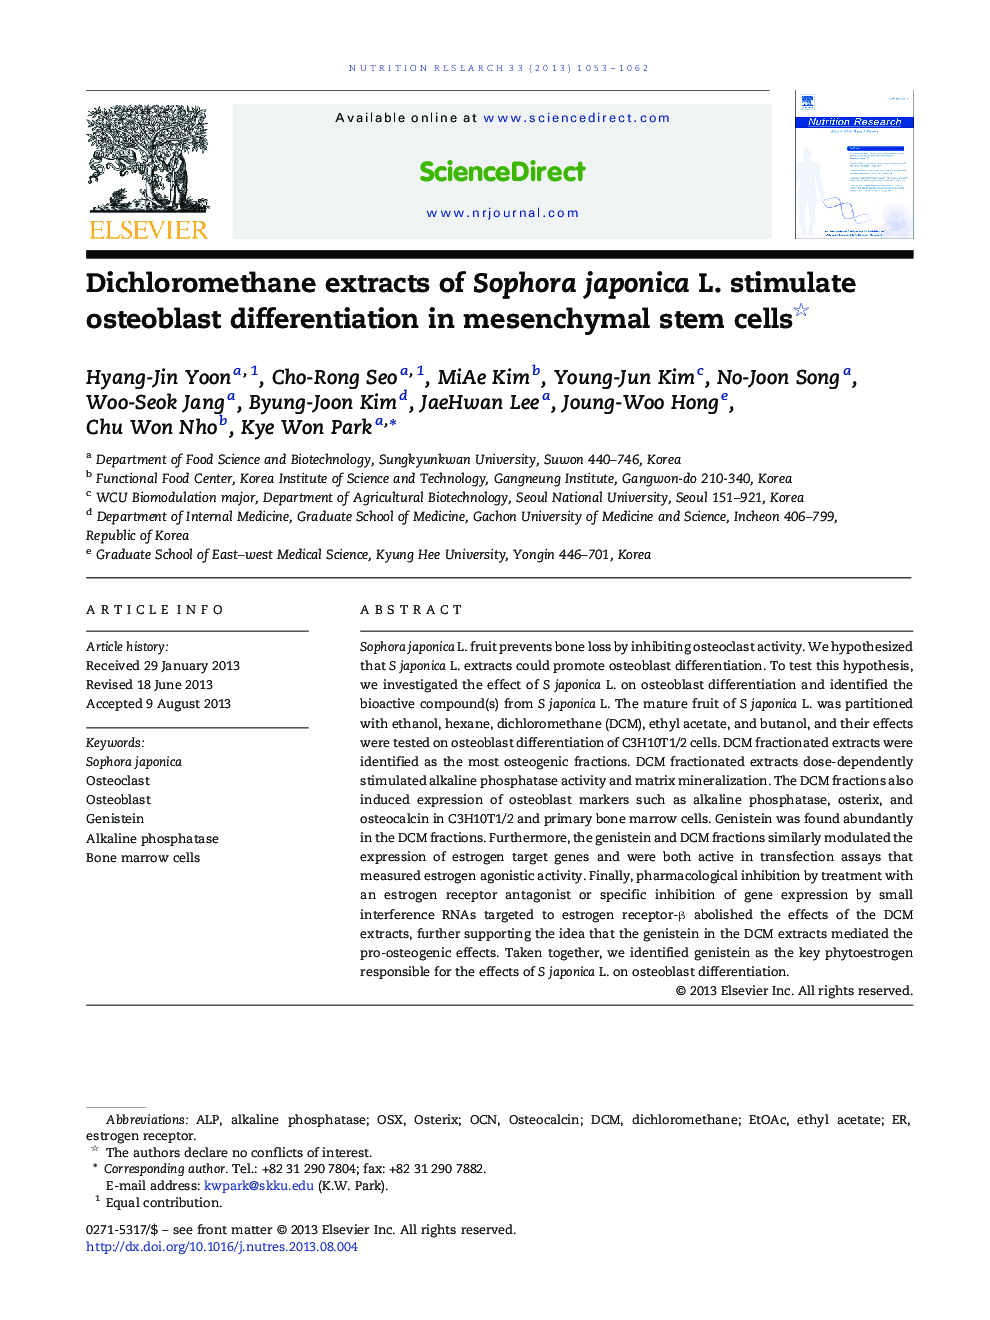 Dichloromethane extracts of Sophora japonica L. stimulate osteoblast differentiation in mesenchymal stem cells